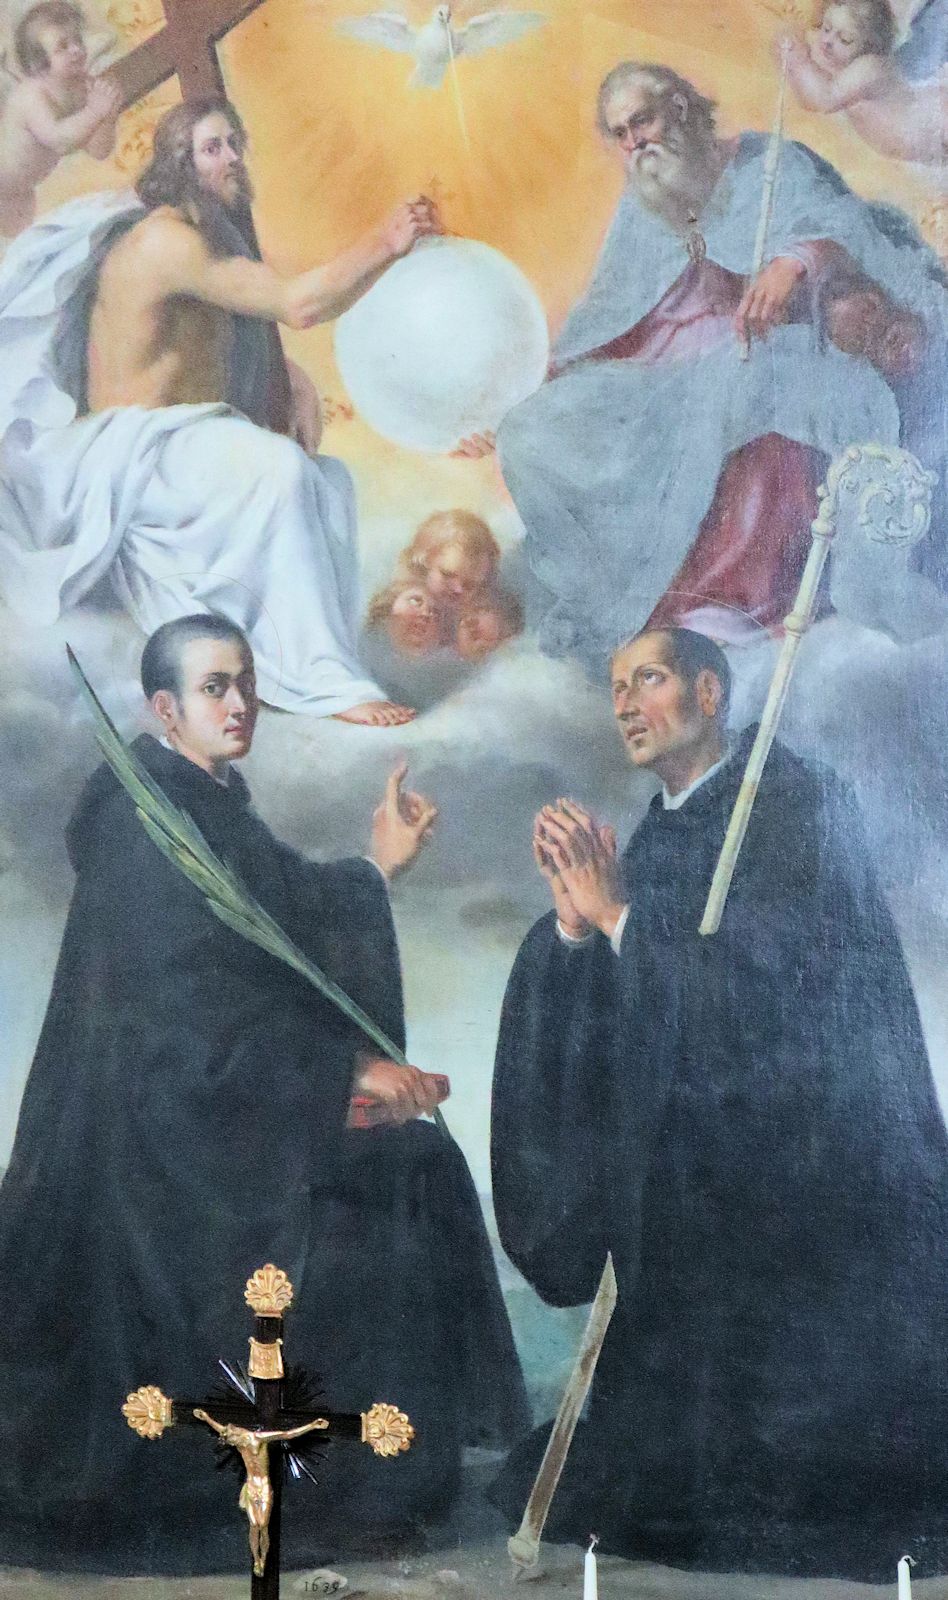 Altarbild: Placidus (links) und Maurus von Subiaco, in der Kathedrale Santa Scolastica bei Subiaco